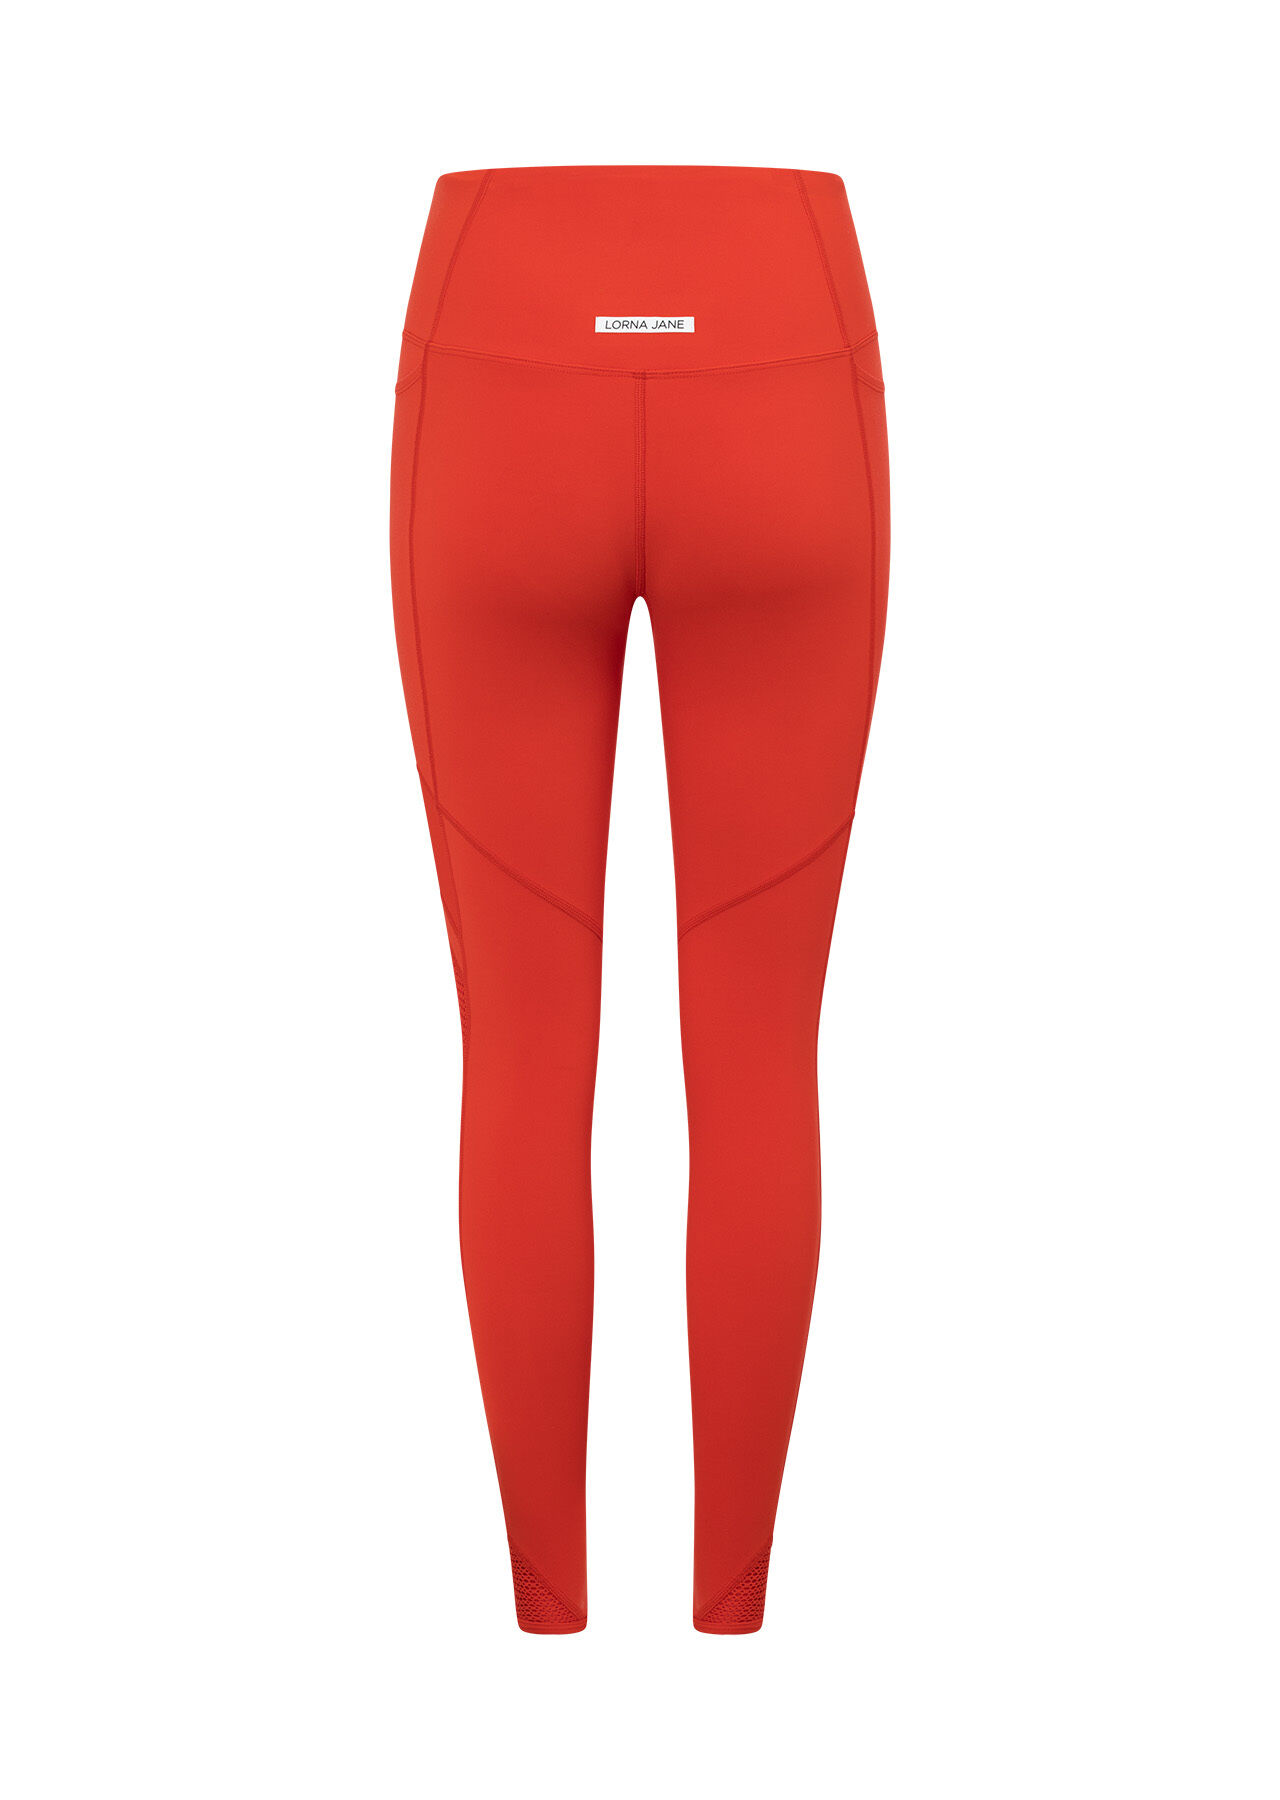 Wholesale Shiny girl Women Yoga Pants| Alibaba.com